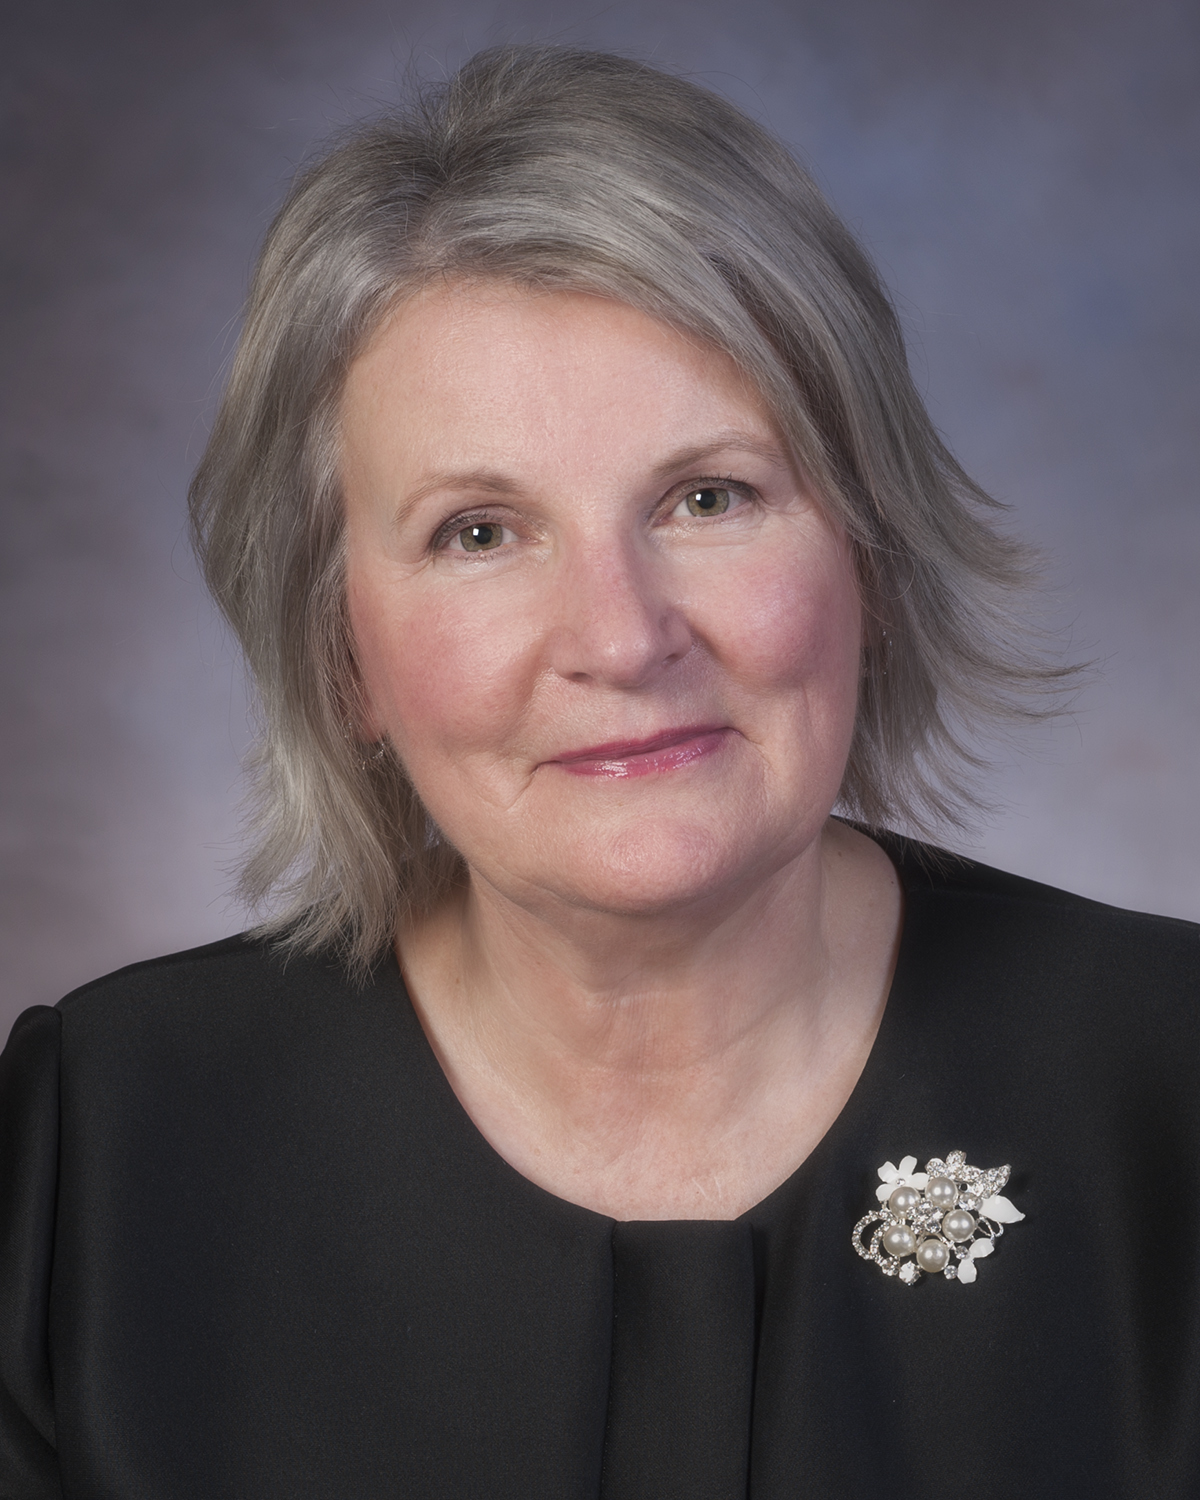 A photo of Hon. Darlene Compton, Speaker of the Legislative Assembly